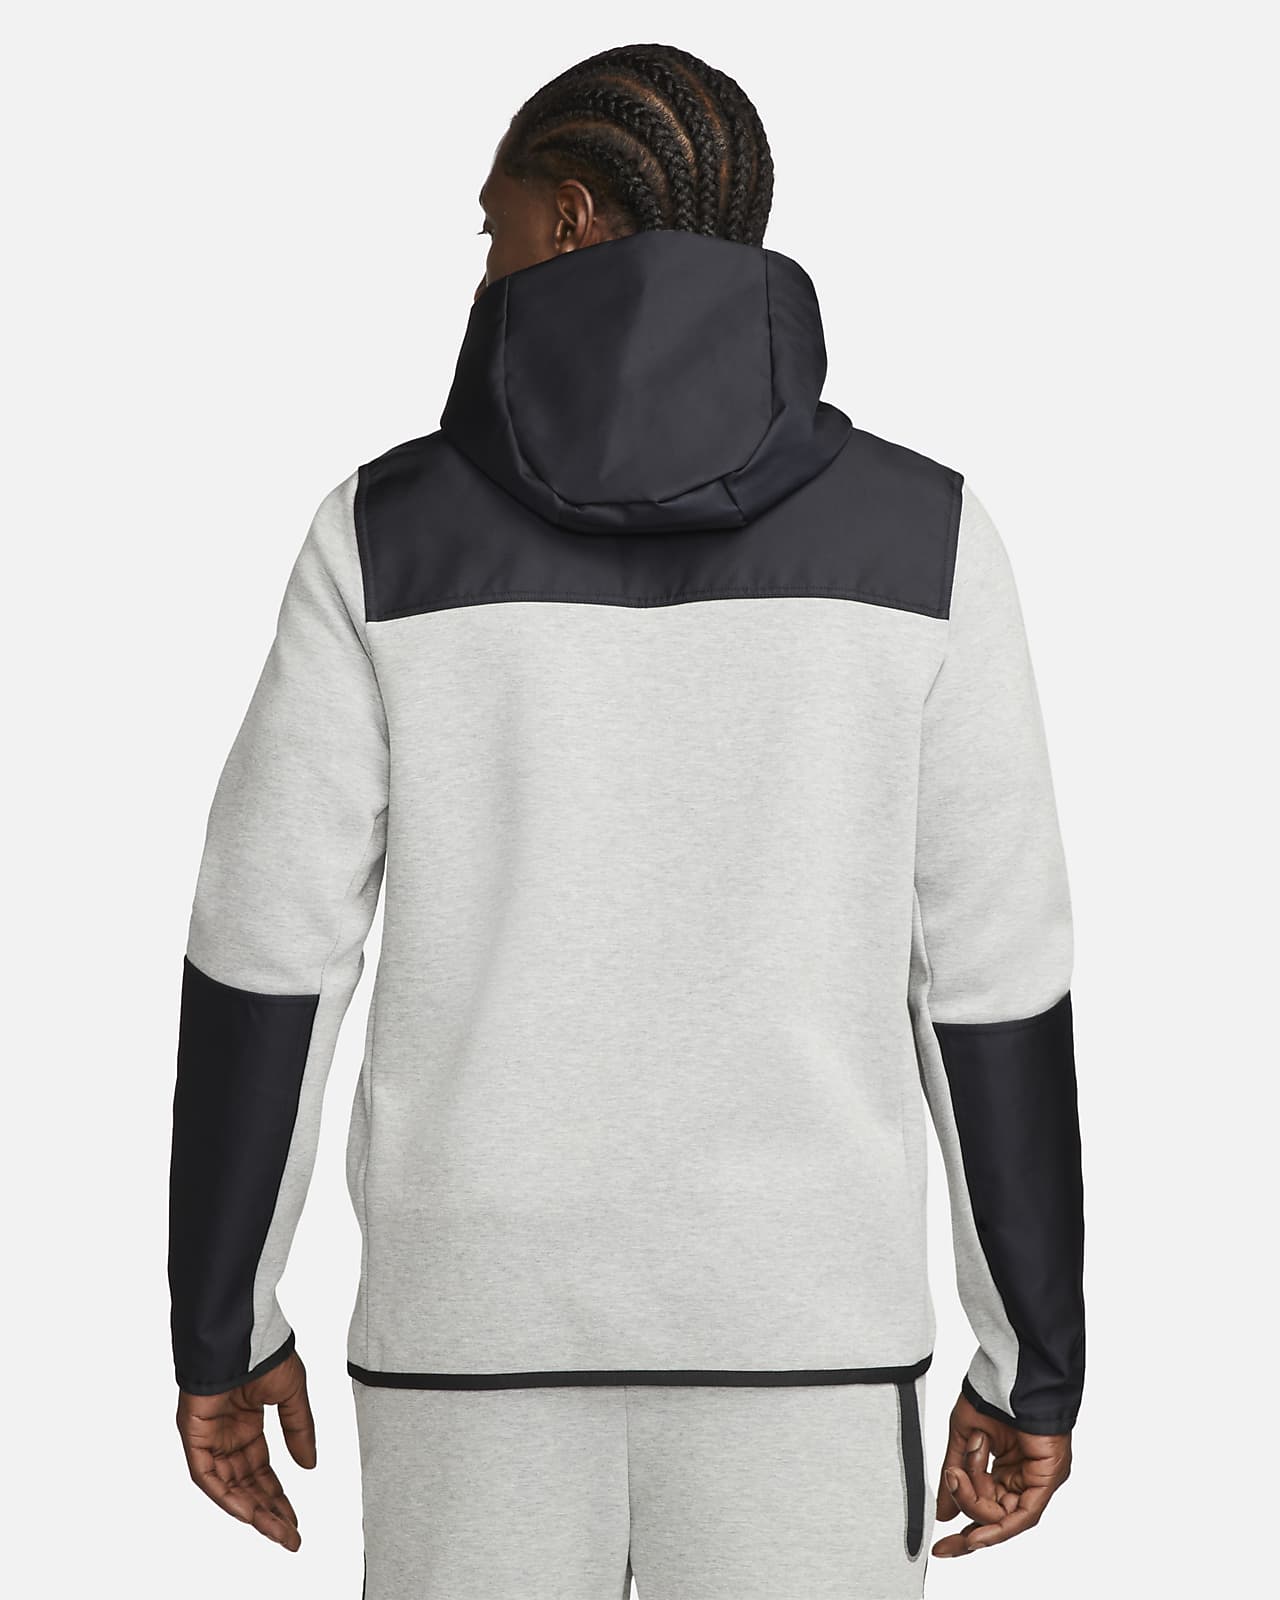 Nike Sportswear Tech Fleece Men's Full-Zip Top. Nike SA